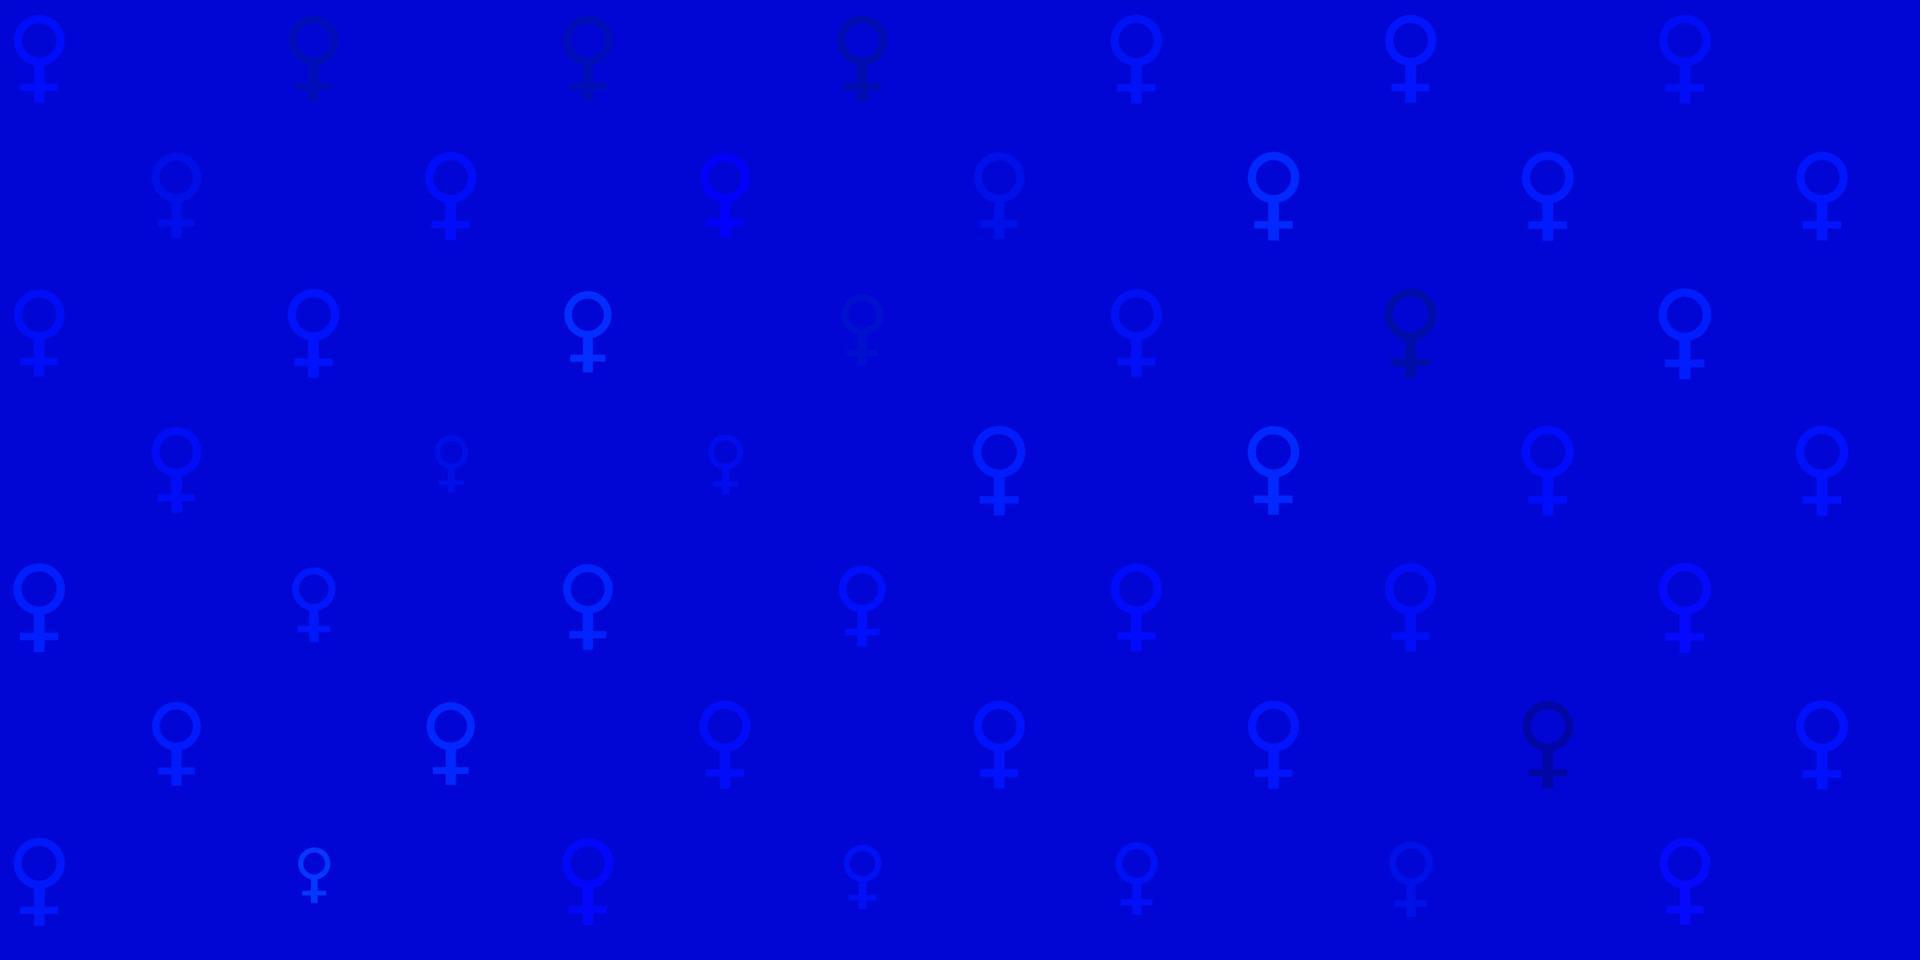 texture vecteur bleu clair avec symboles des droits des femmes.